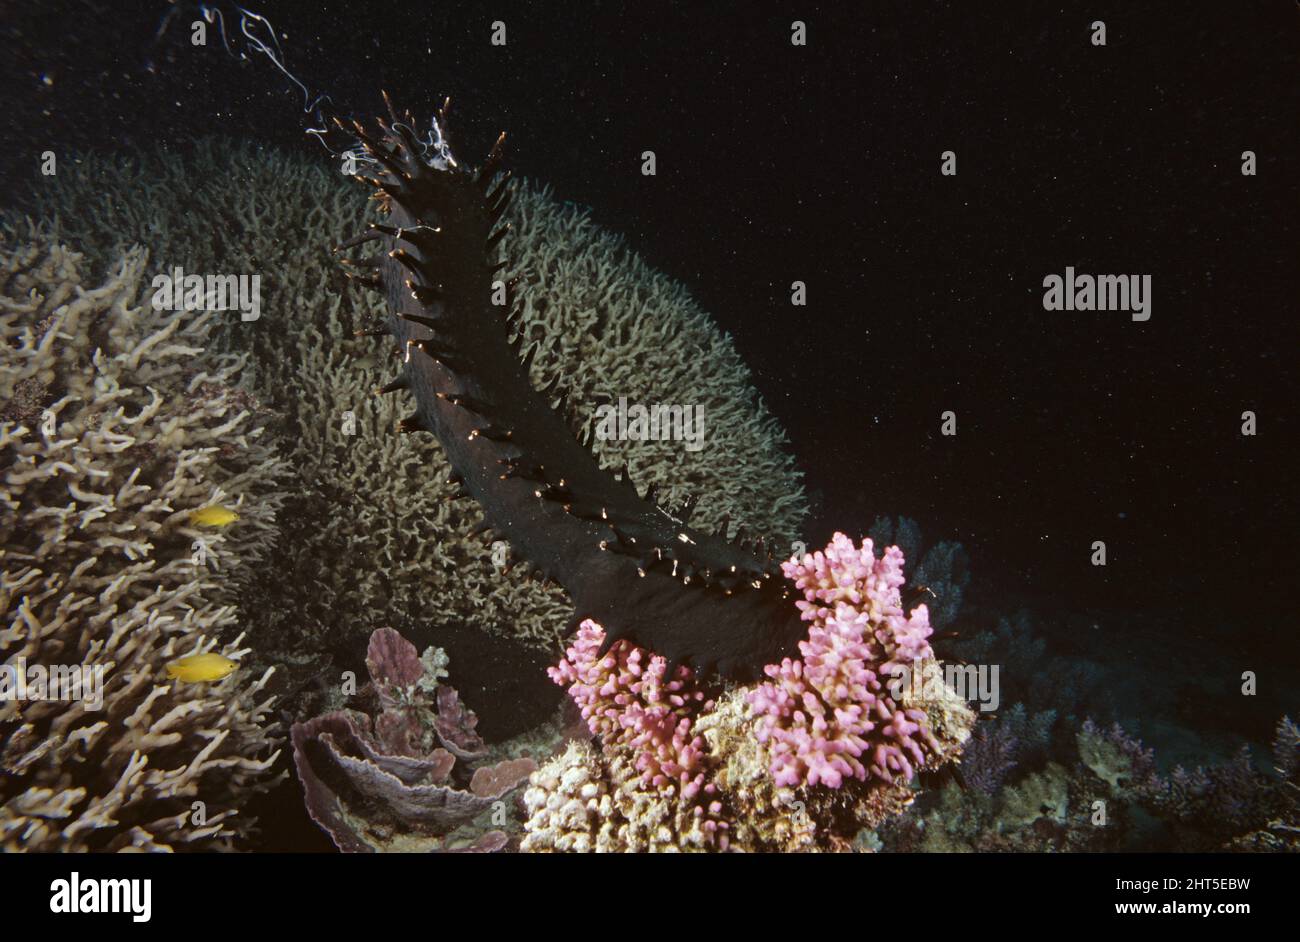 Greenfish  (Stichopus chloronotus),  male, spawning  Indonesia Stock Photo